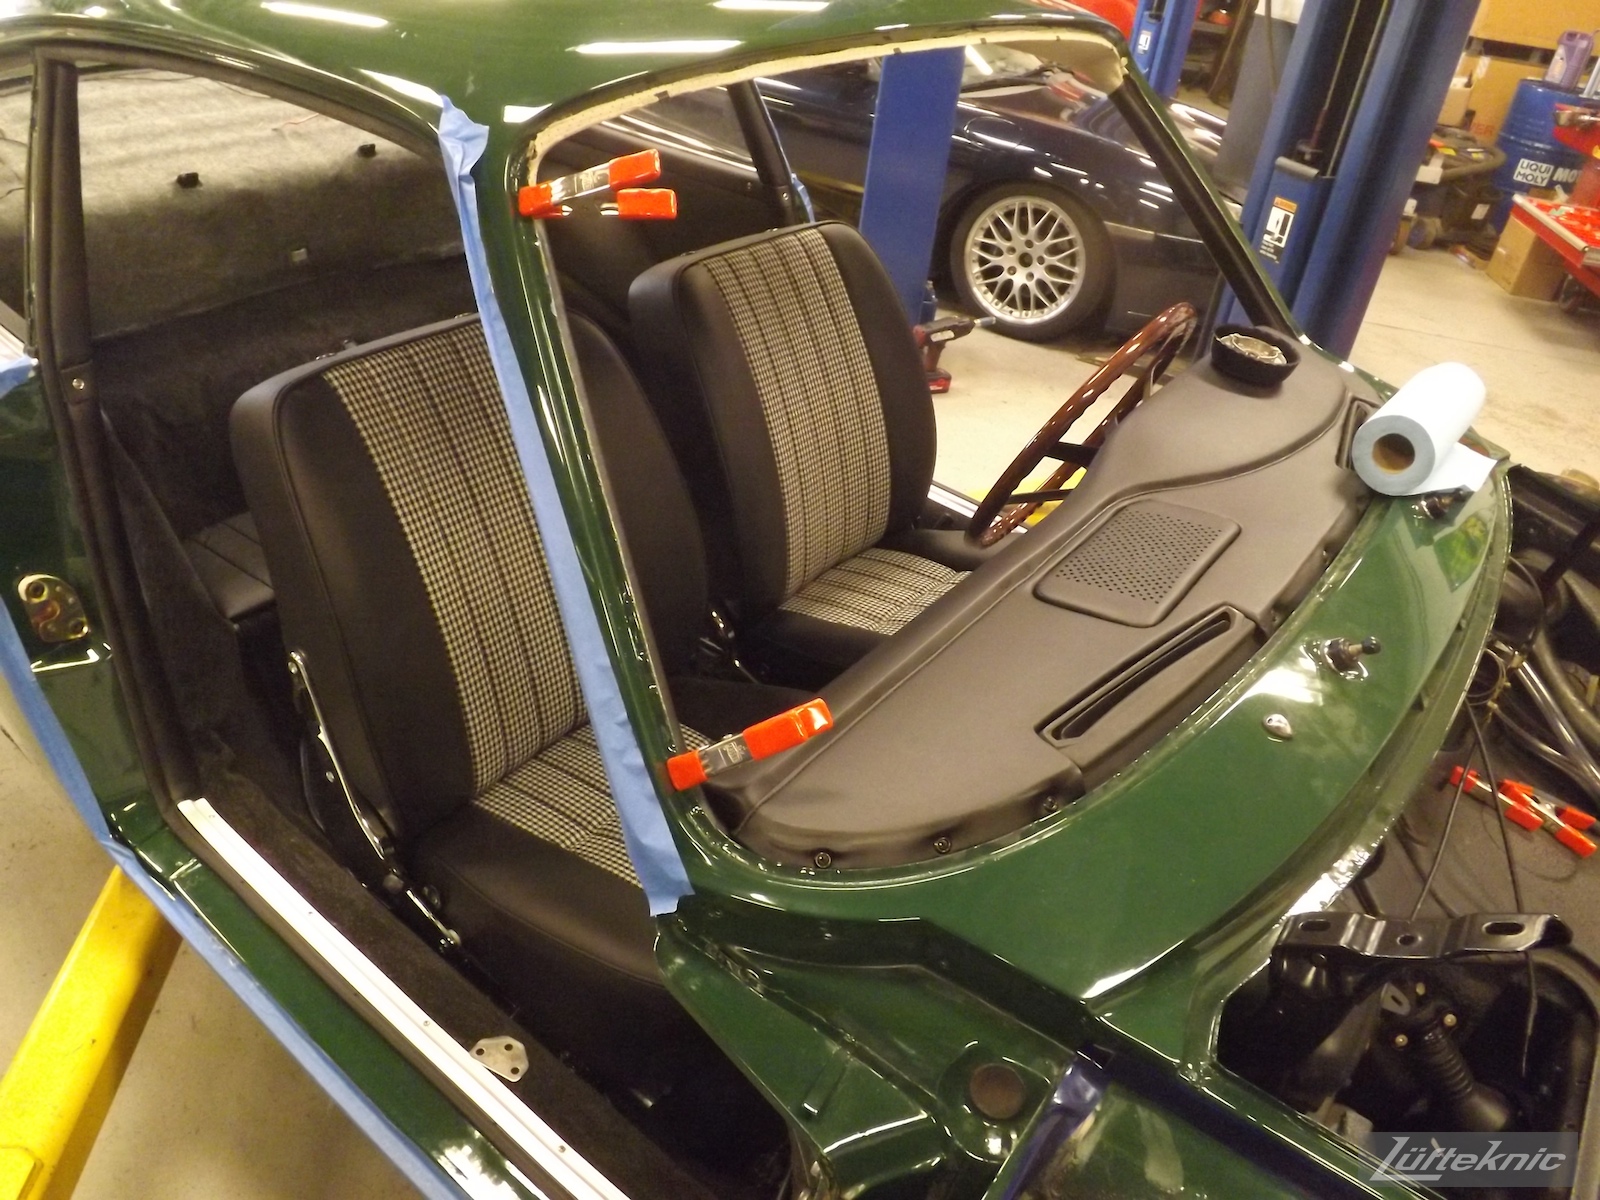 Finishing the interior reassembly of an Irish Green Porsche 912 undergoing restoration at Lufteknic.